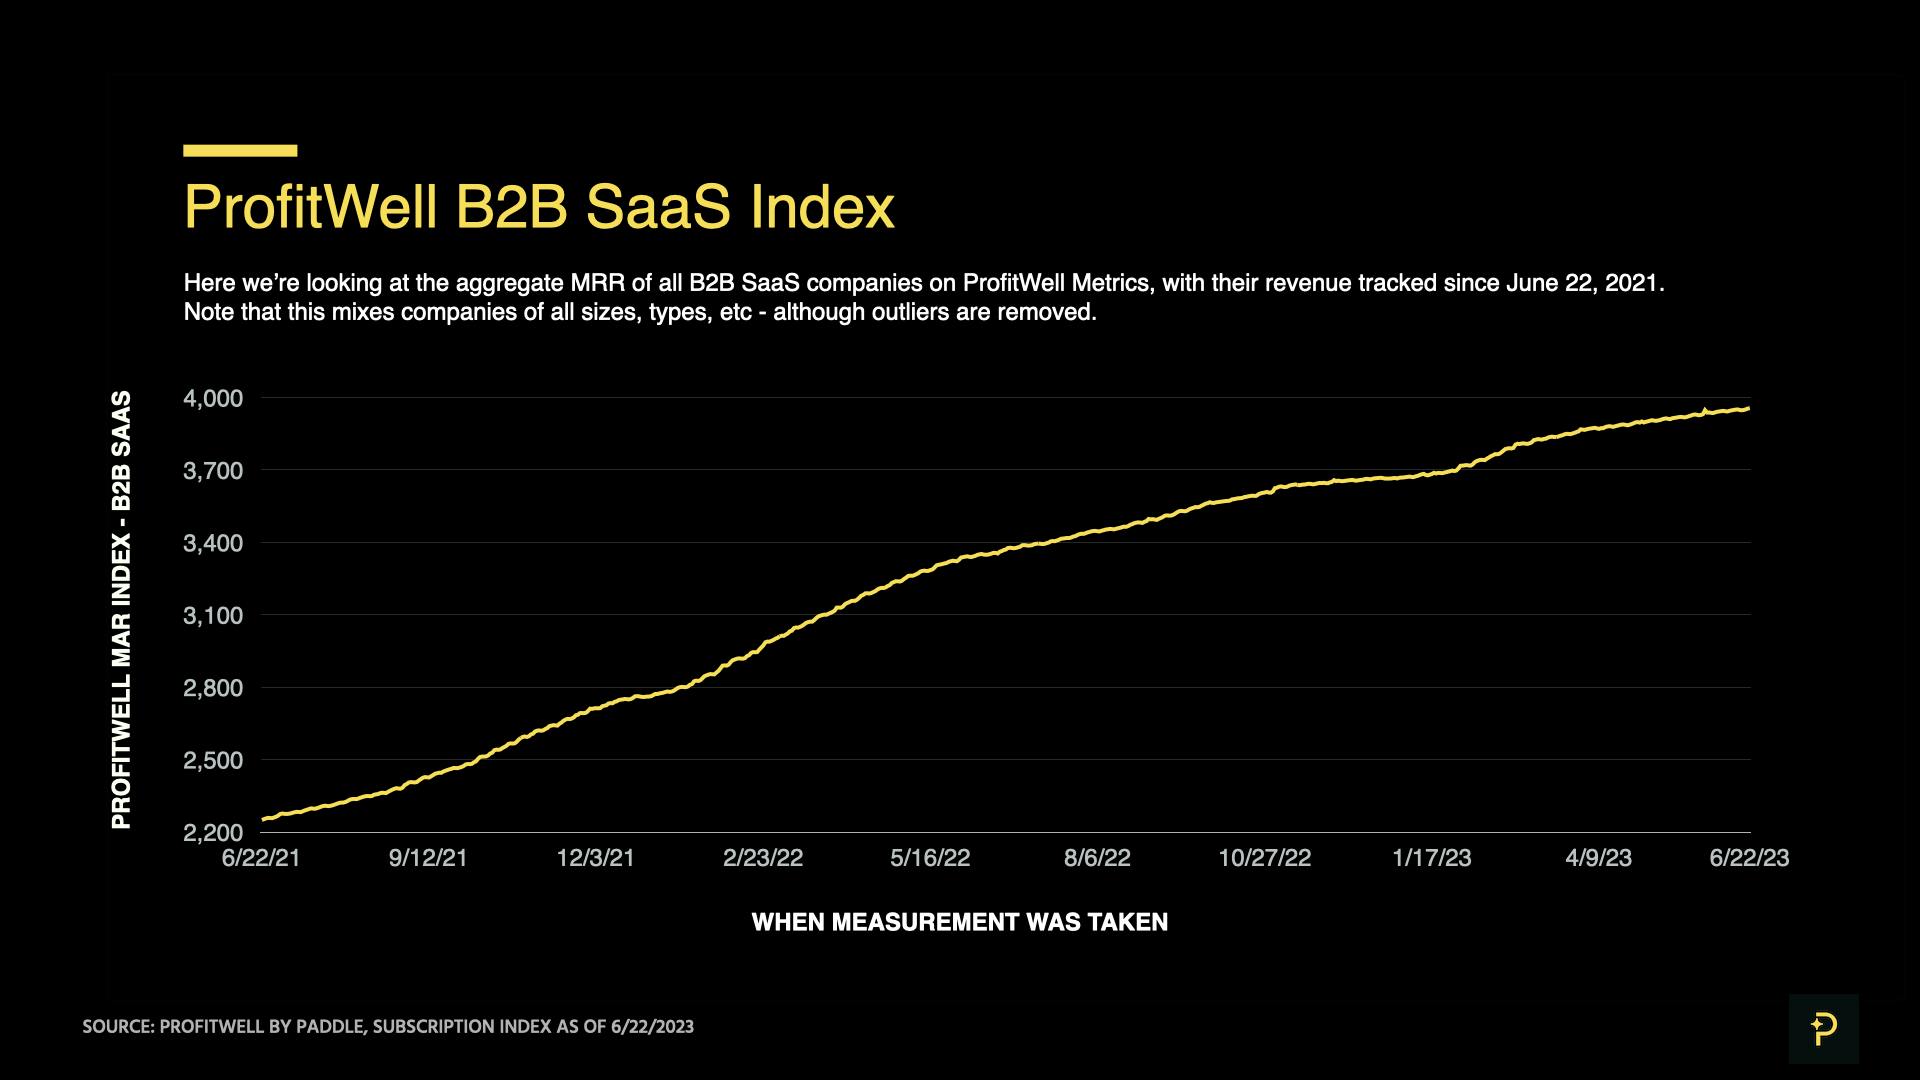 ProfitWell B2B SaaS Index - MRR over time